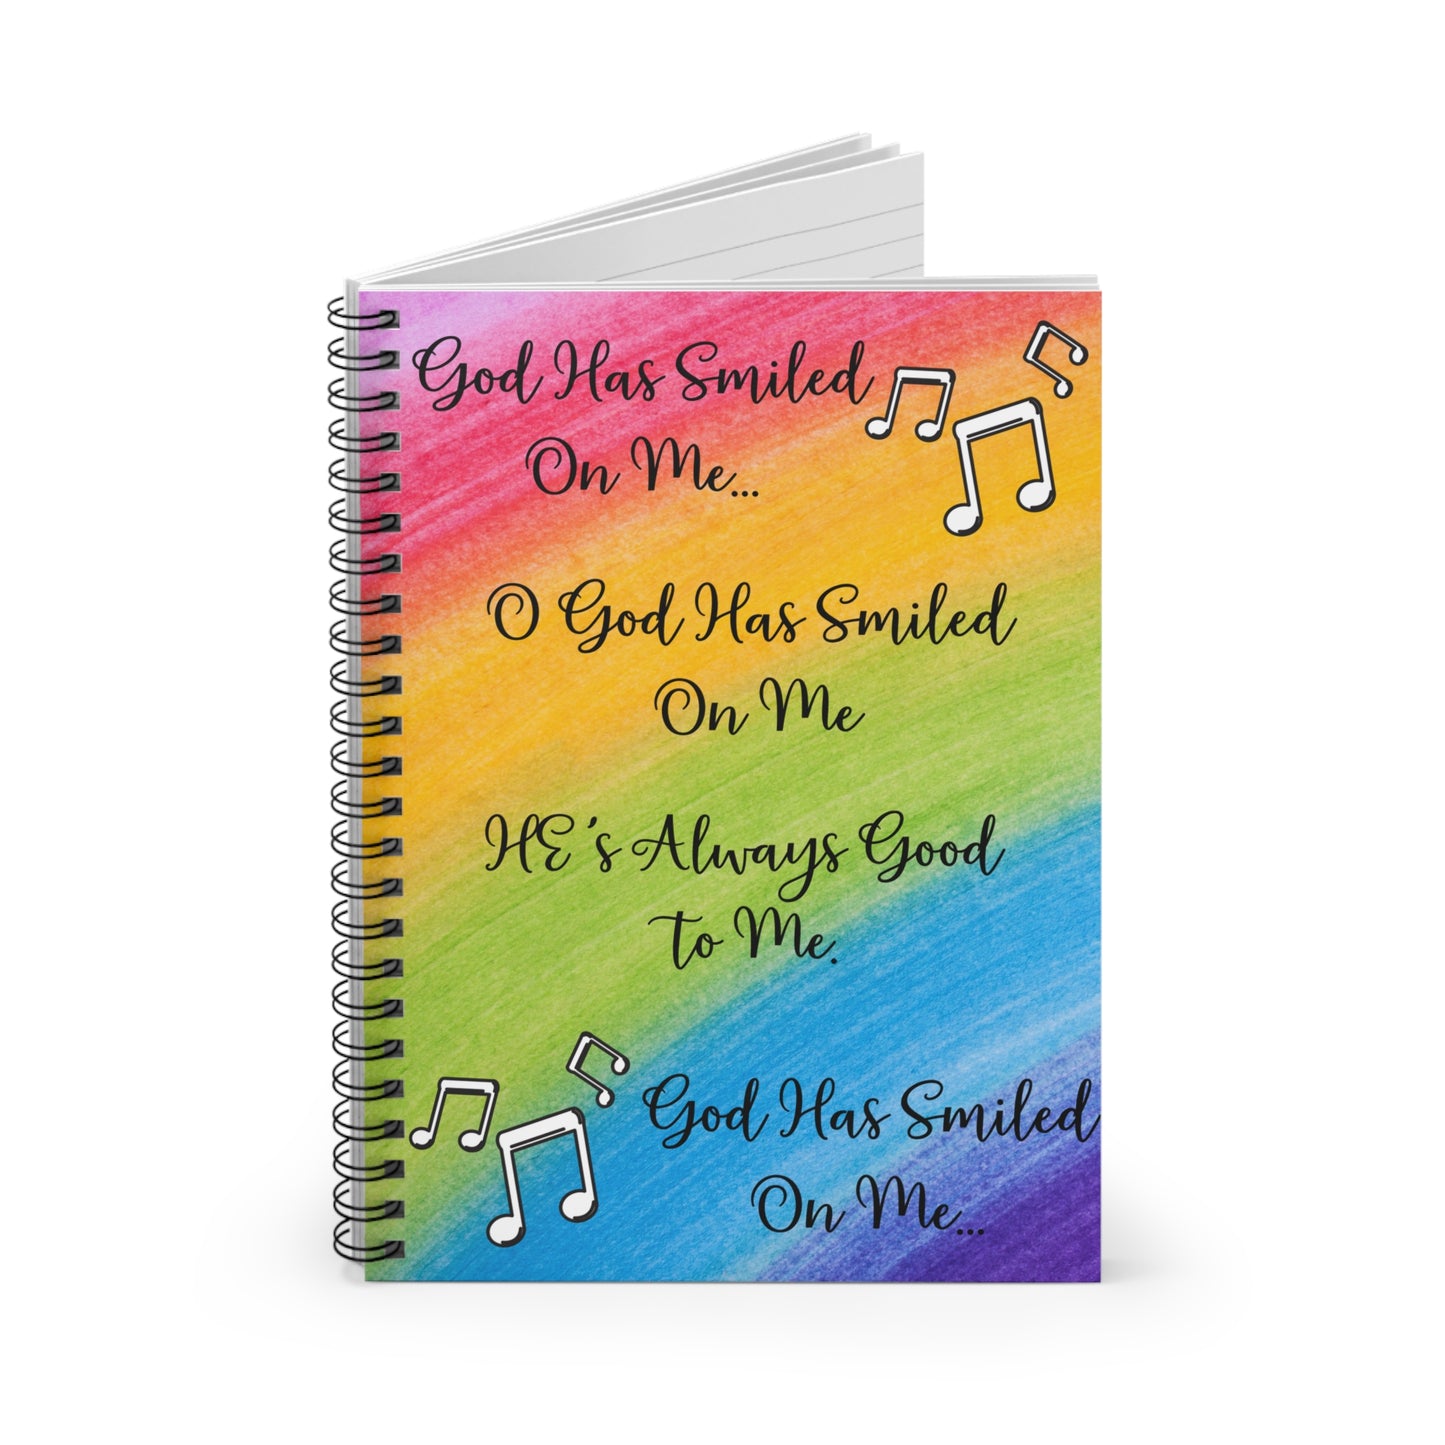 God's Smiled On Me Personal Journal Spiral Notebook Tablet - Ruled Line